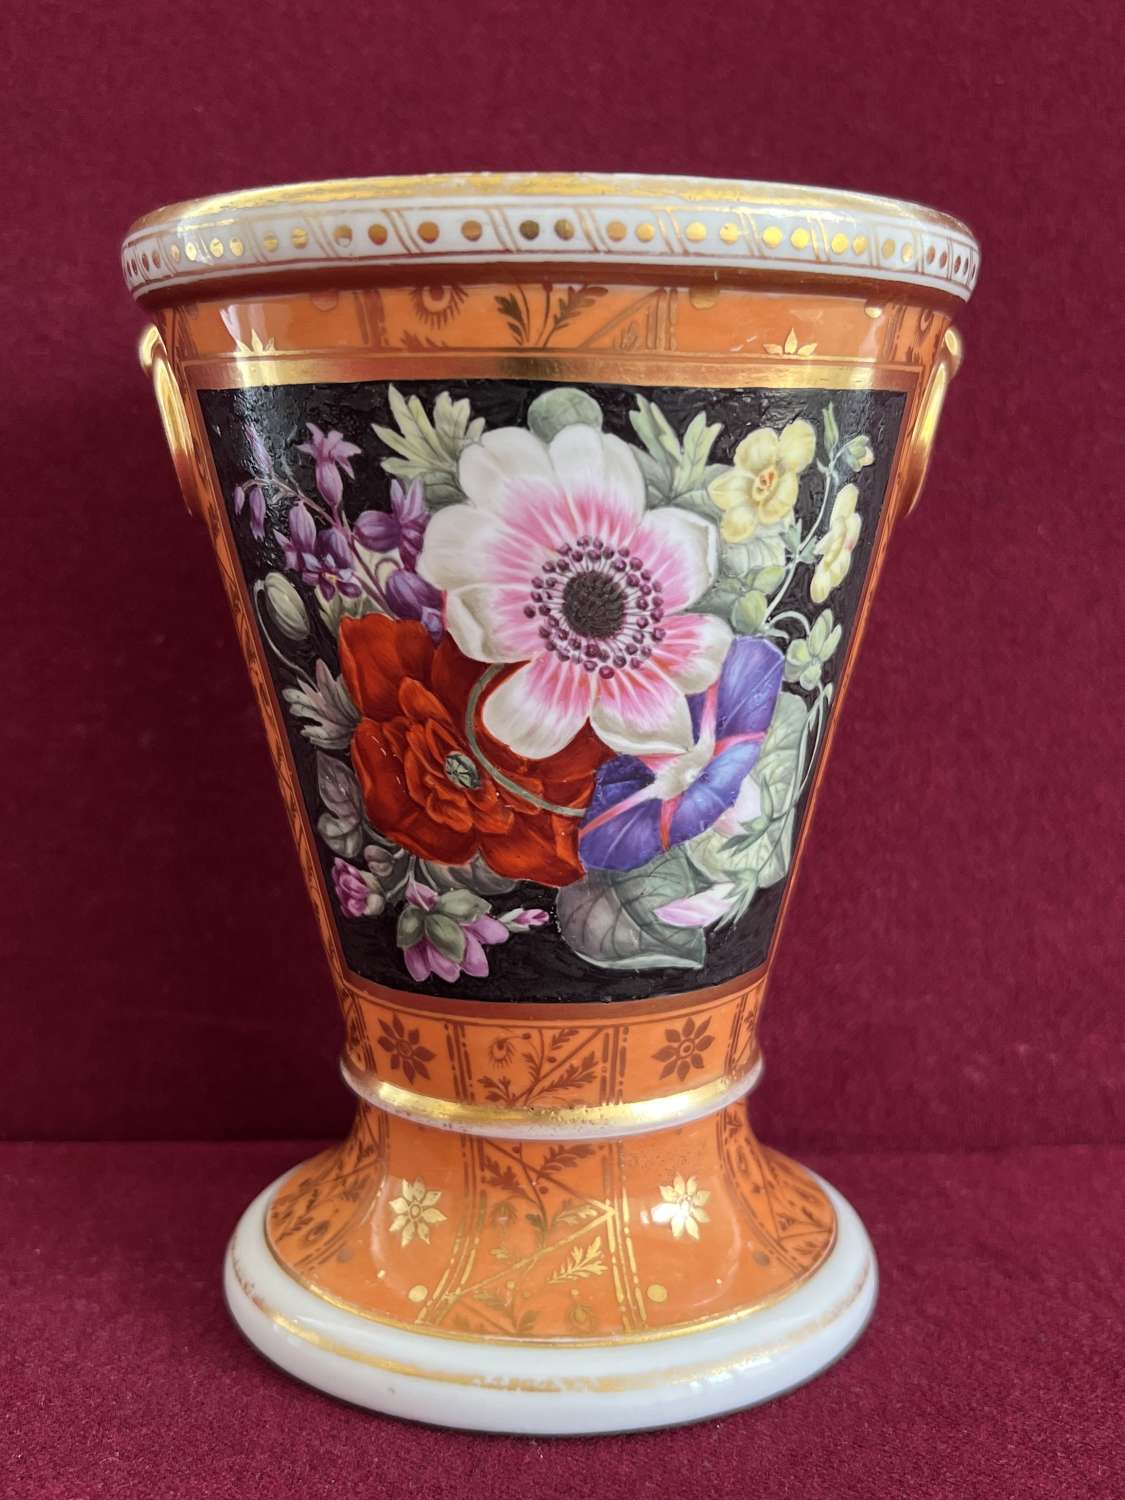 A Flight and Barr Worcester porcelain Jardiniere c.1800-1805